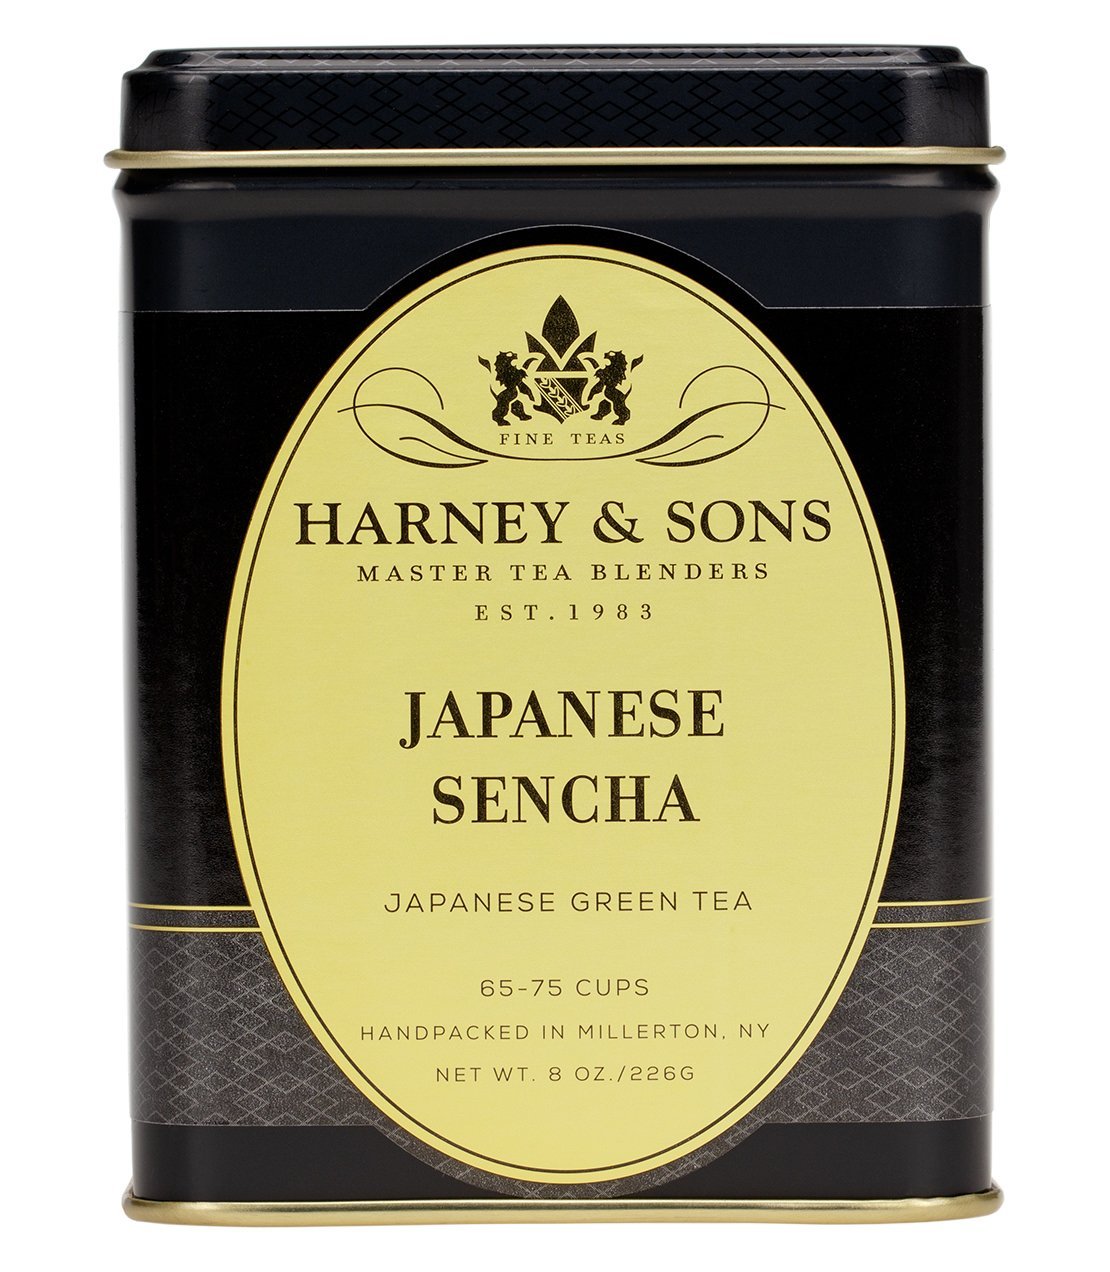 Japanese Sencha - Harney & Sons Teas, European Distribution Center